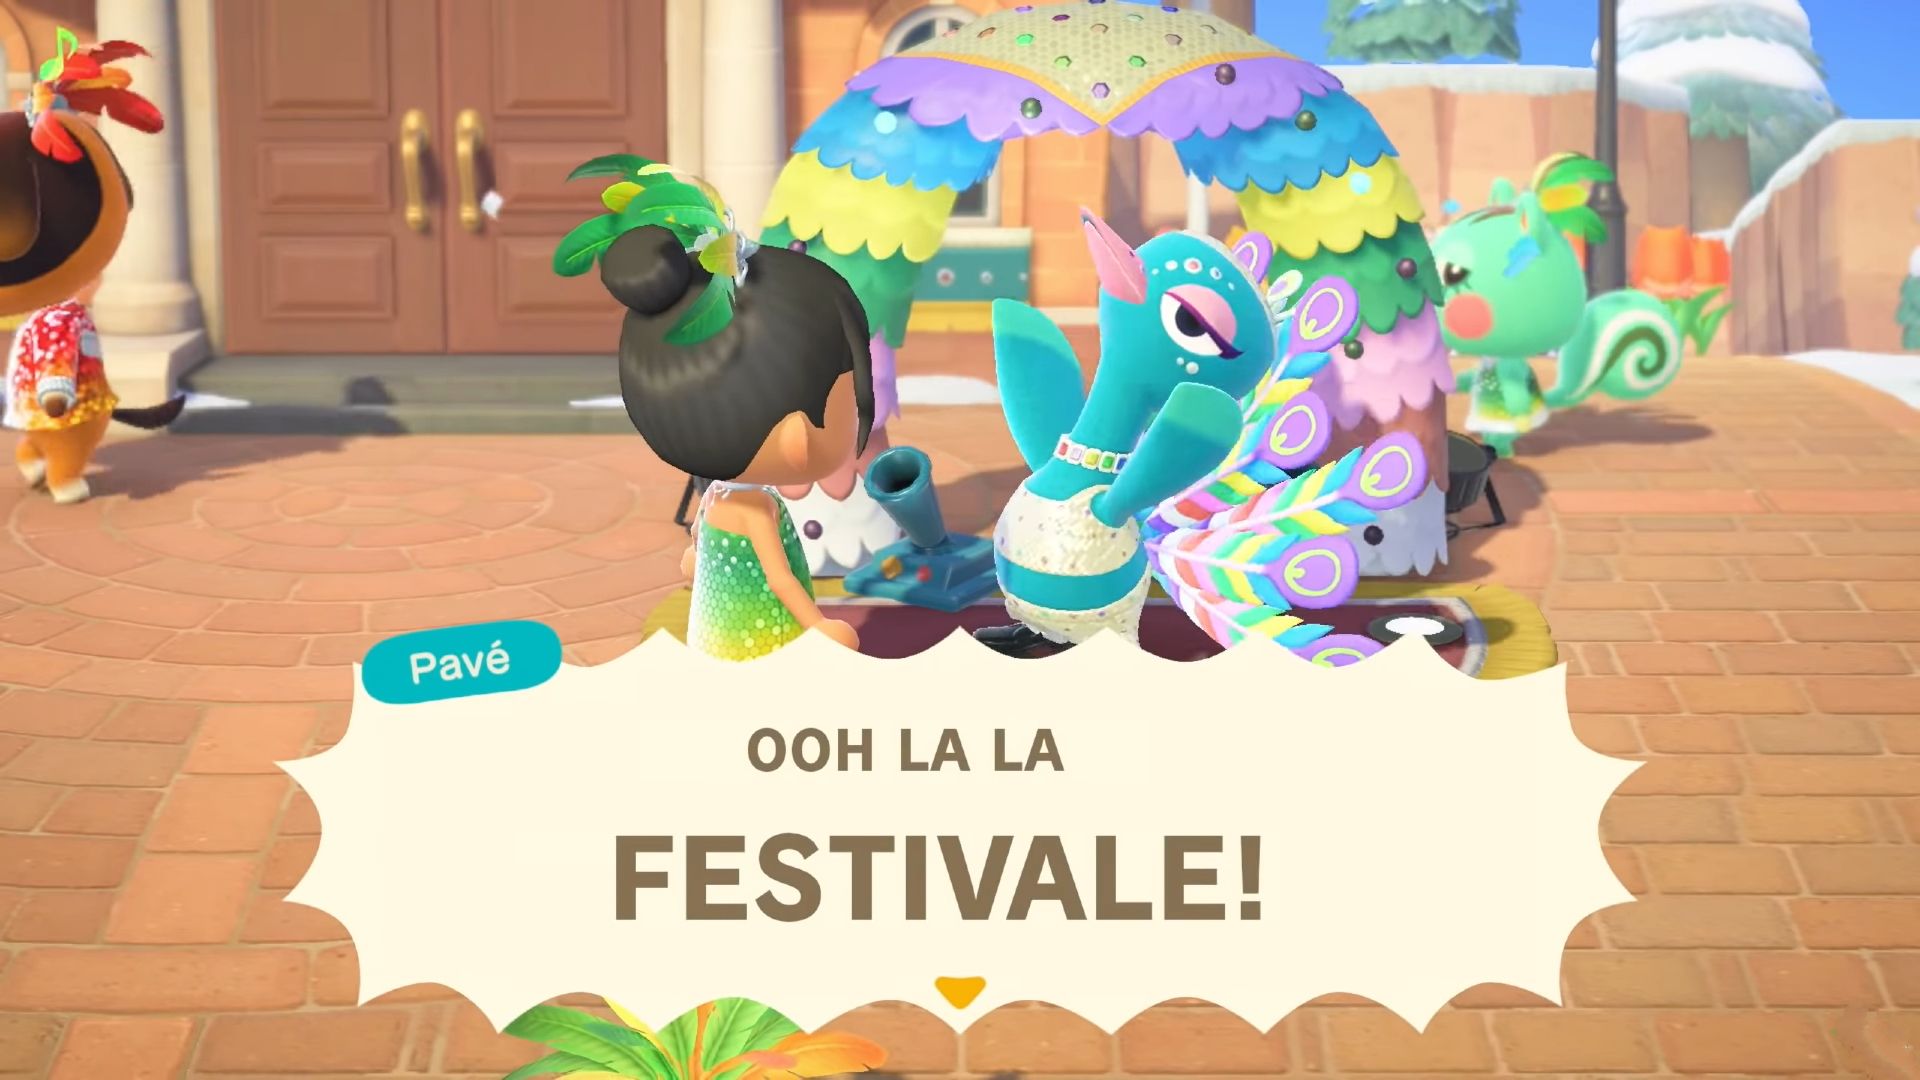 Animal Crossing New Horizons Pave Celebrating Festivale